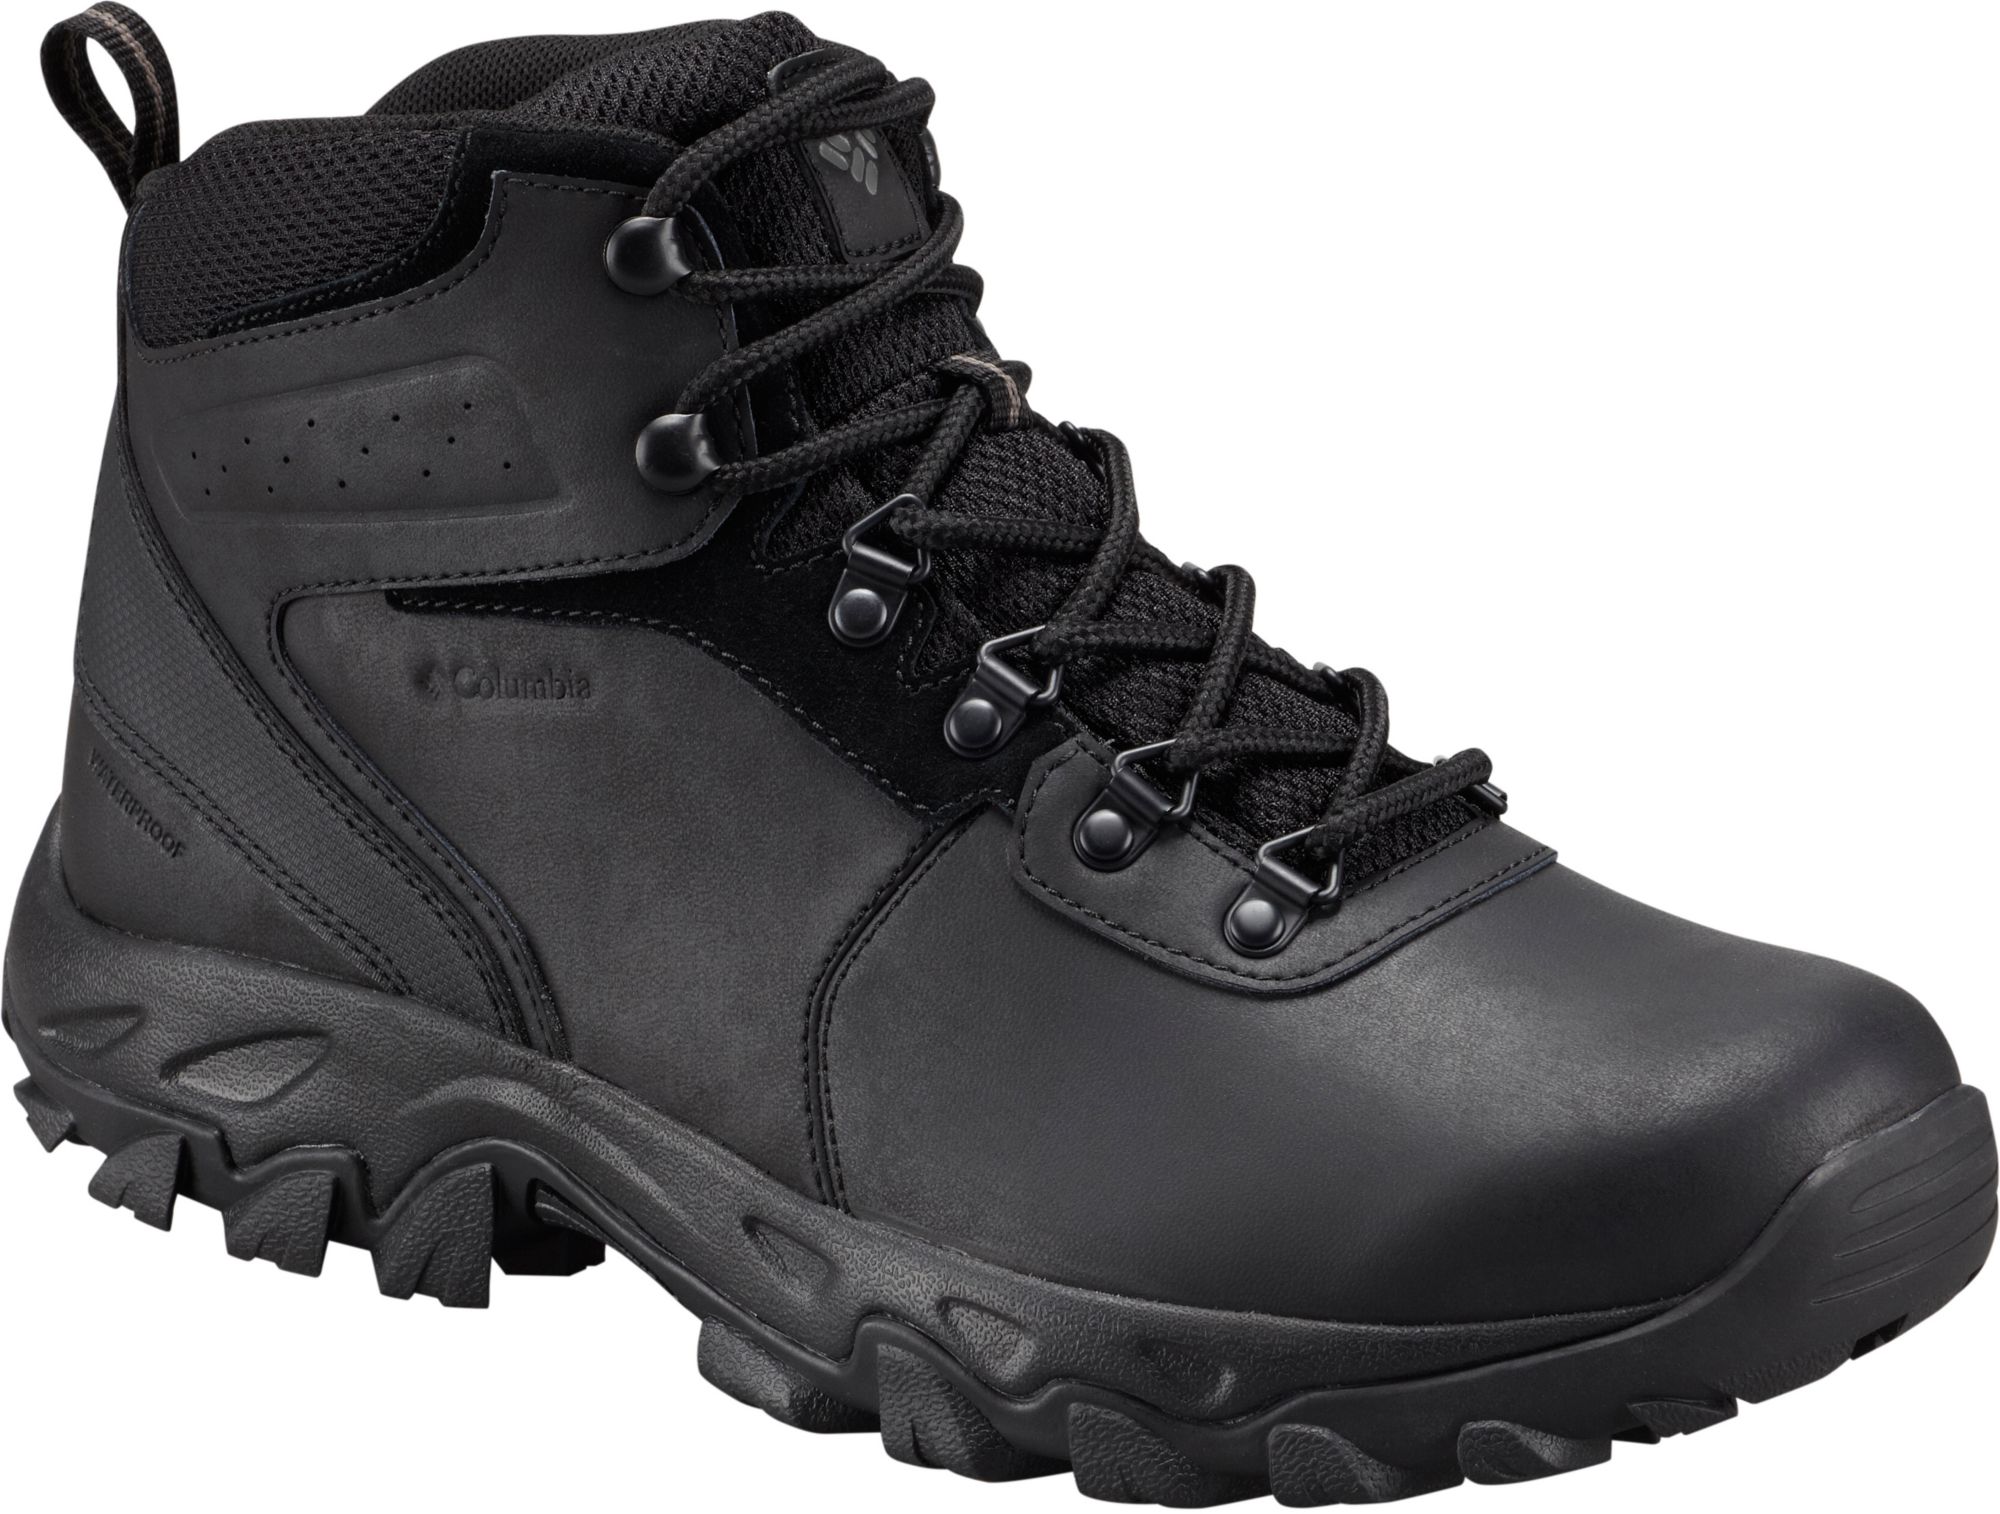 Photos - Trekking Shoes Columbia Men's Newton Ridge Plus II Waterproof Hiking Boots, Size 8, Black 